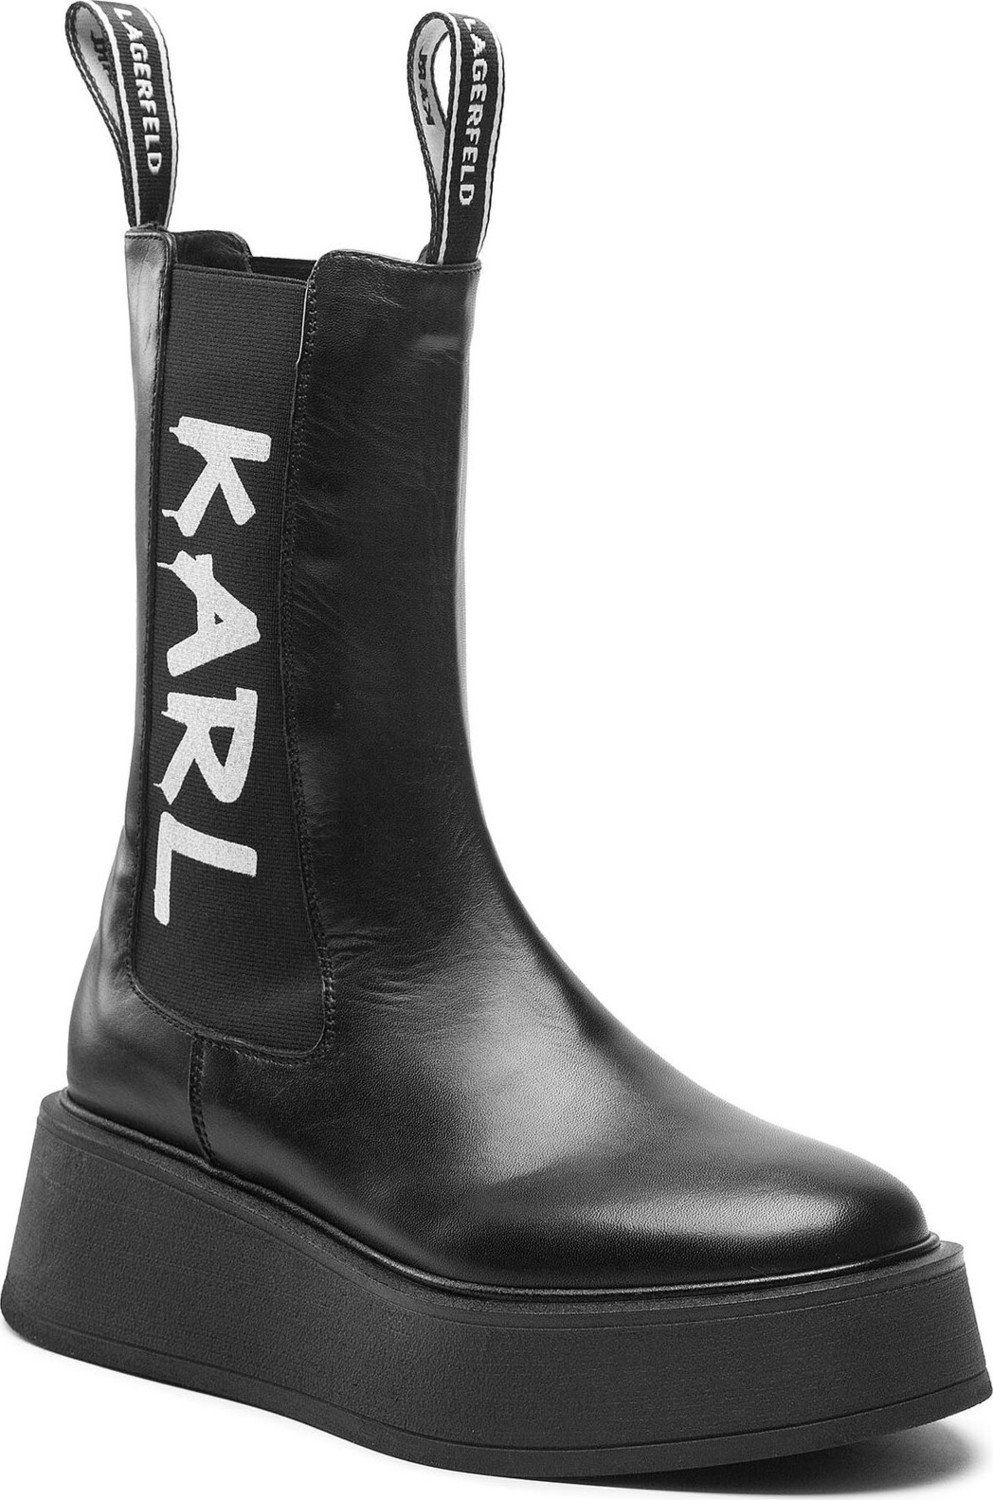 Kotníková obuv s elastickým prvkem KARL LAGERFELD KL42460 Black Lthr